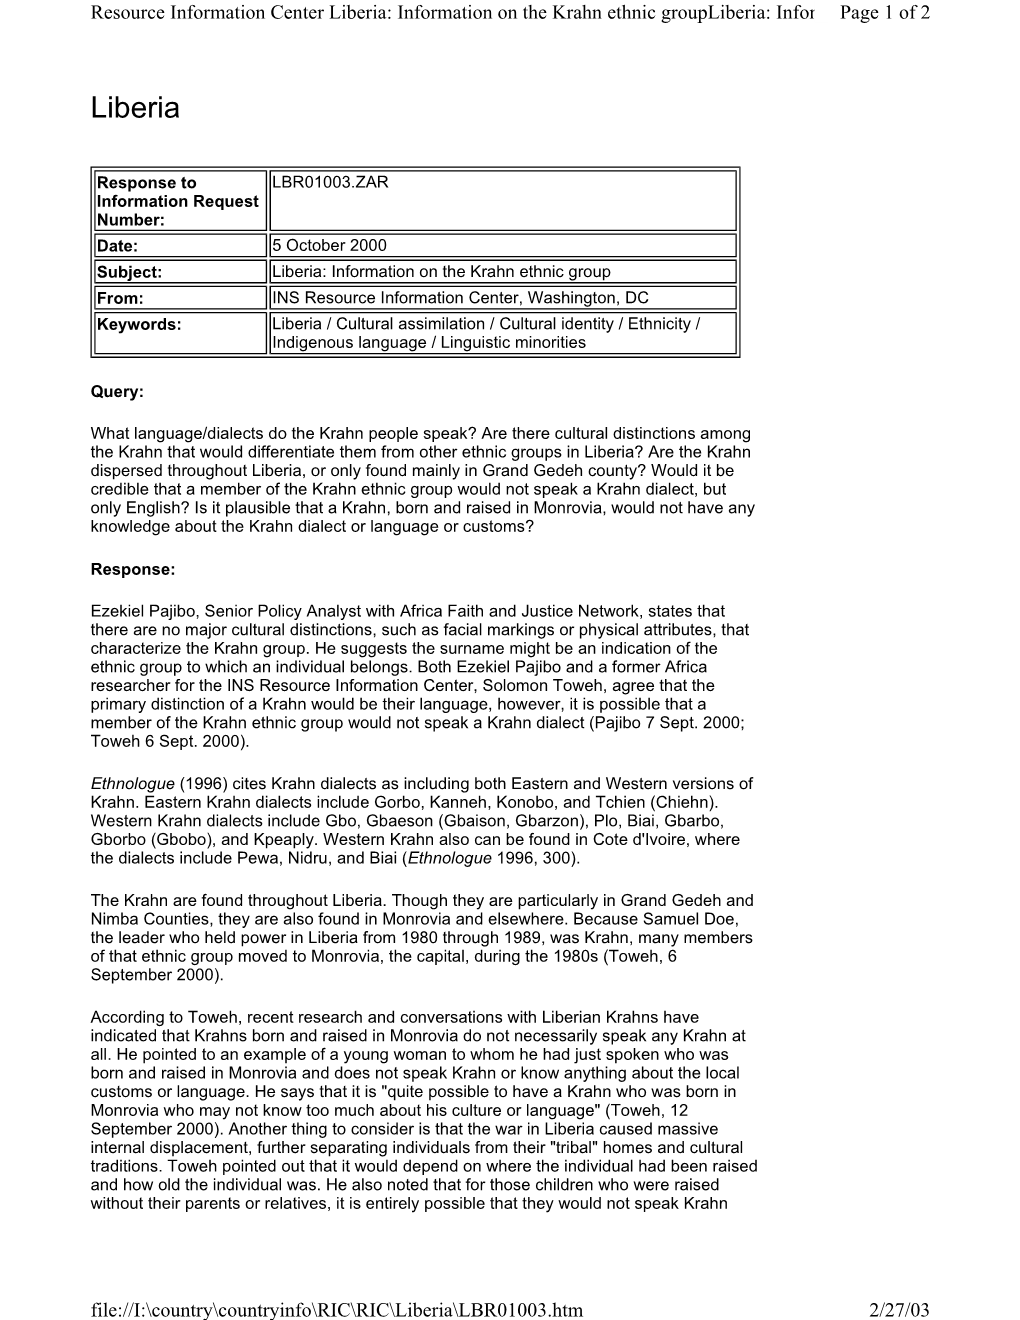 Liberia: Information on the Krahn Ethnic Groupliberia: Infor...M Page 1 of 2